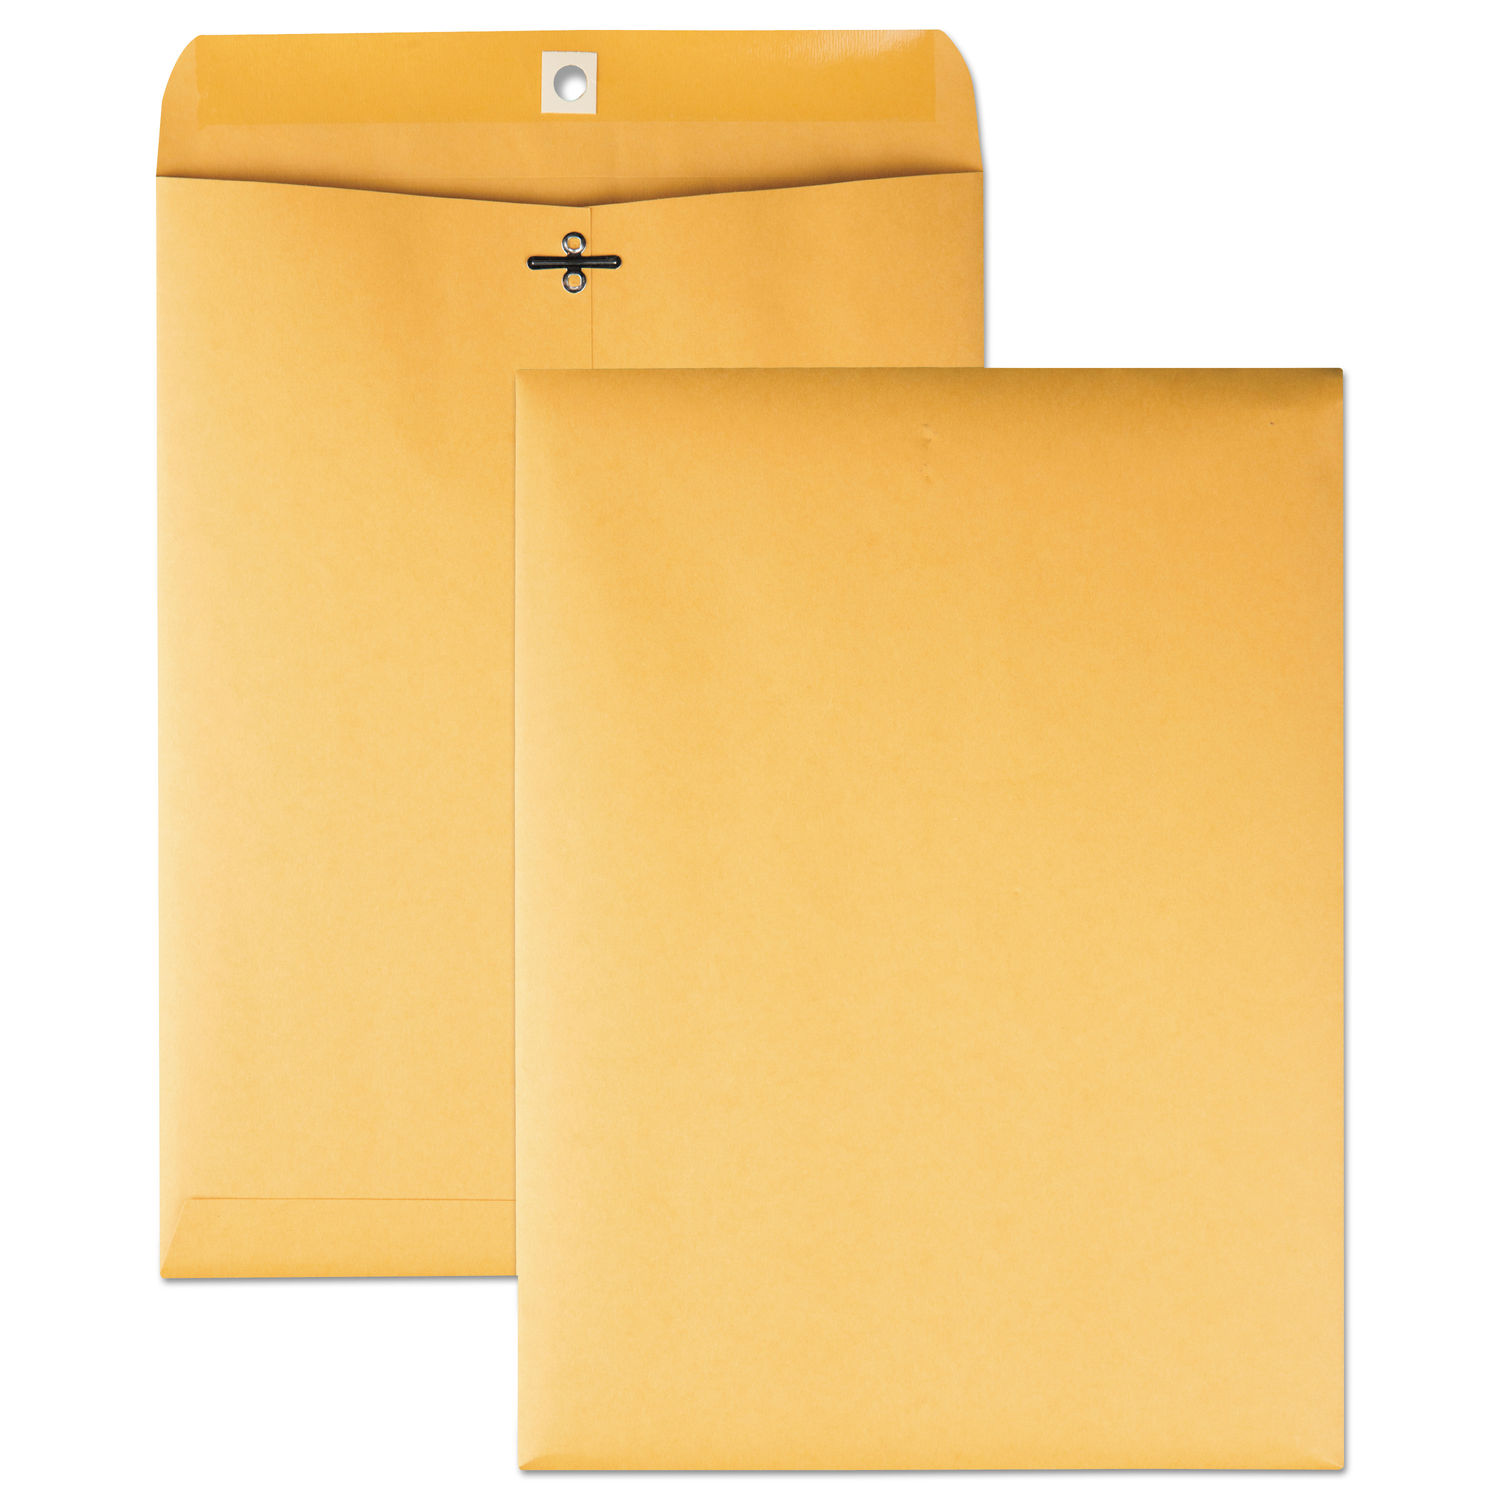 Clasp Envelope 28 lb Bond Weight Kraft, #90, Cheese Blade Flap, Clasp/Gummed Closure, 9 x 12, Brown Kraft, 100/Box